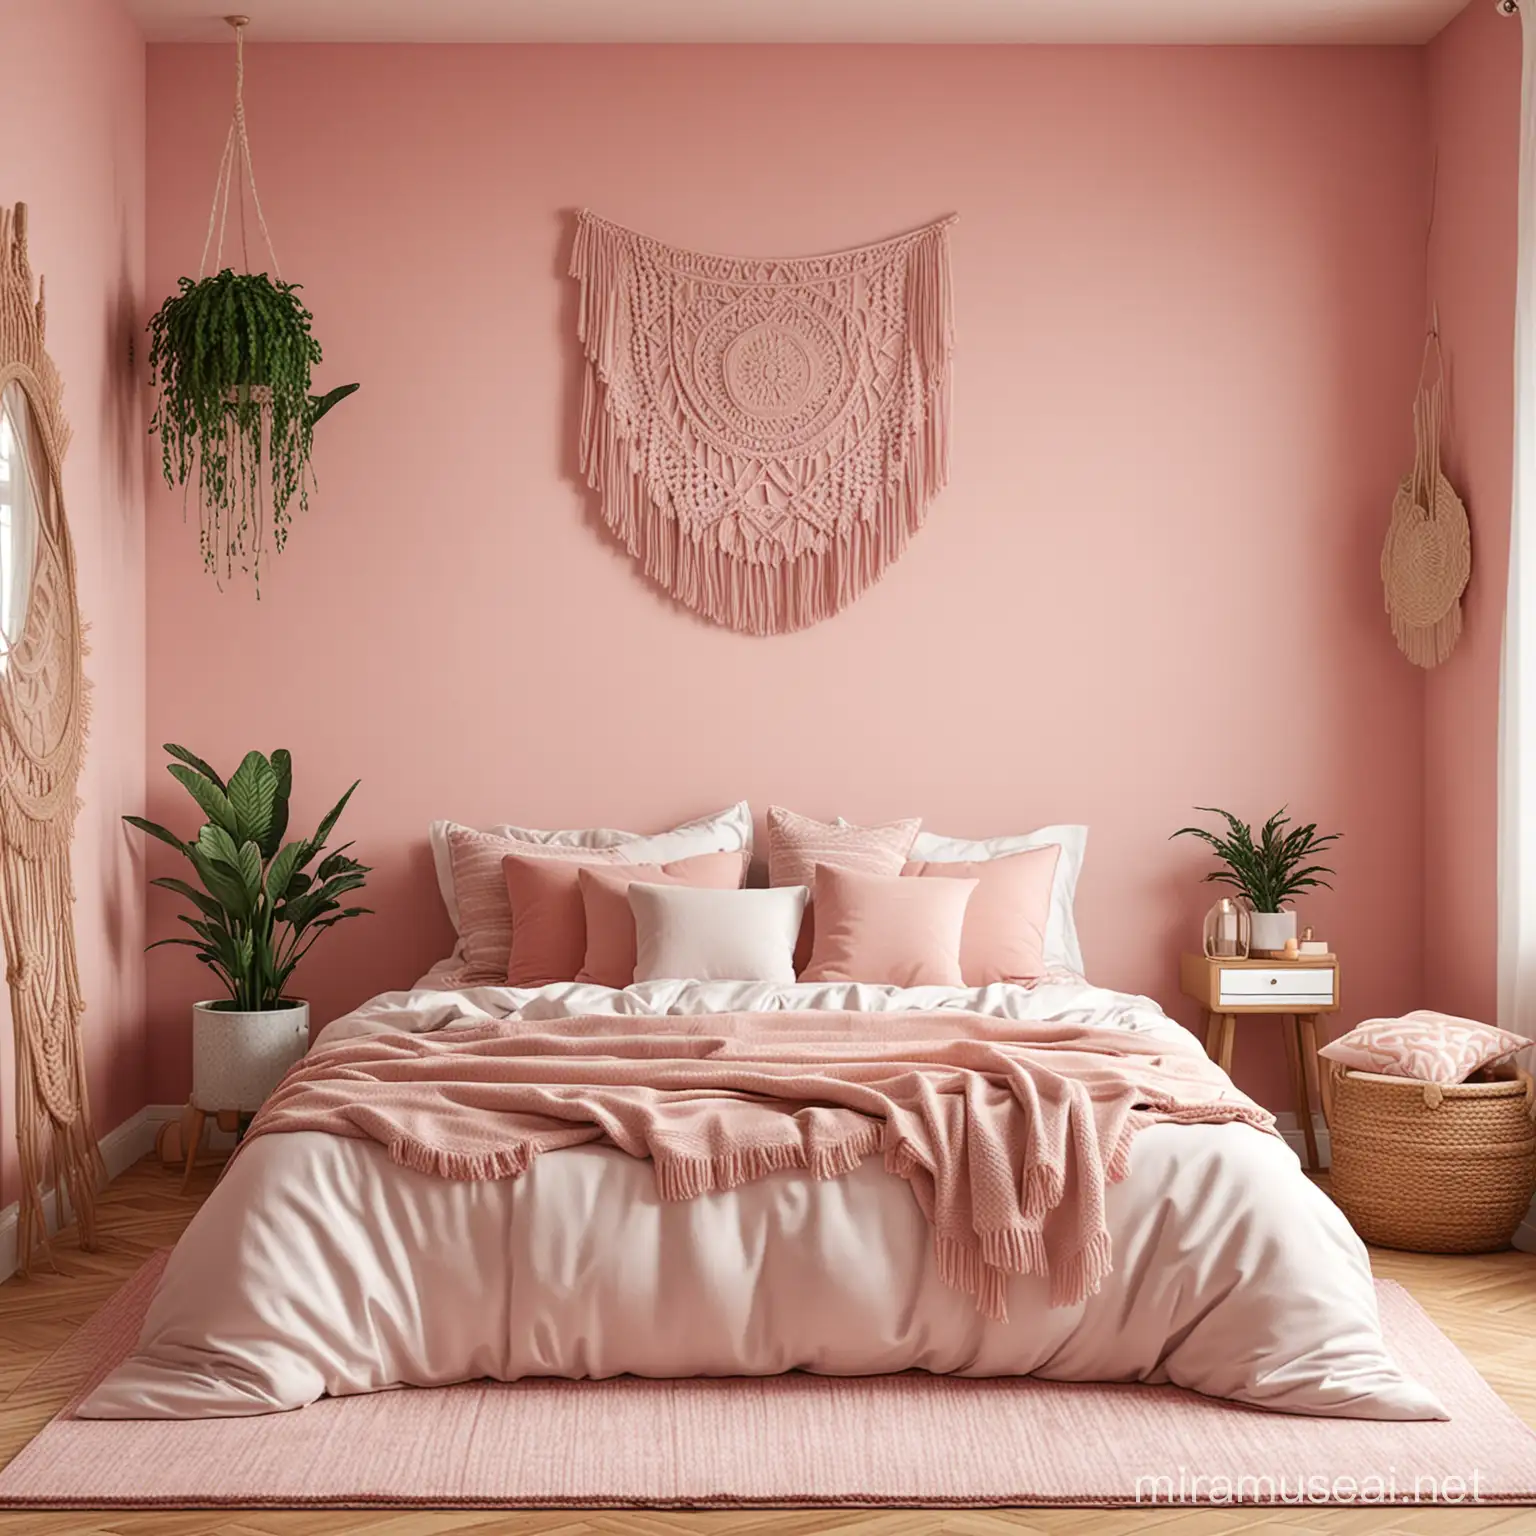 Boho bedroom mockup a little bit pinkish room decor